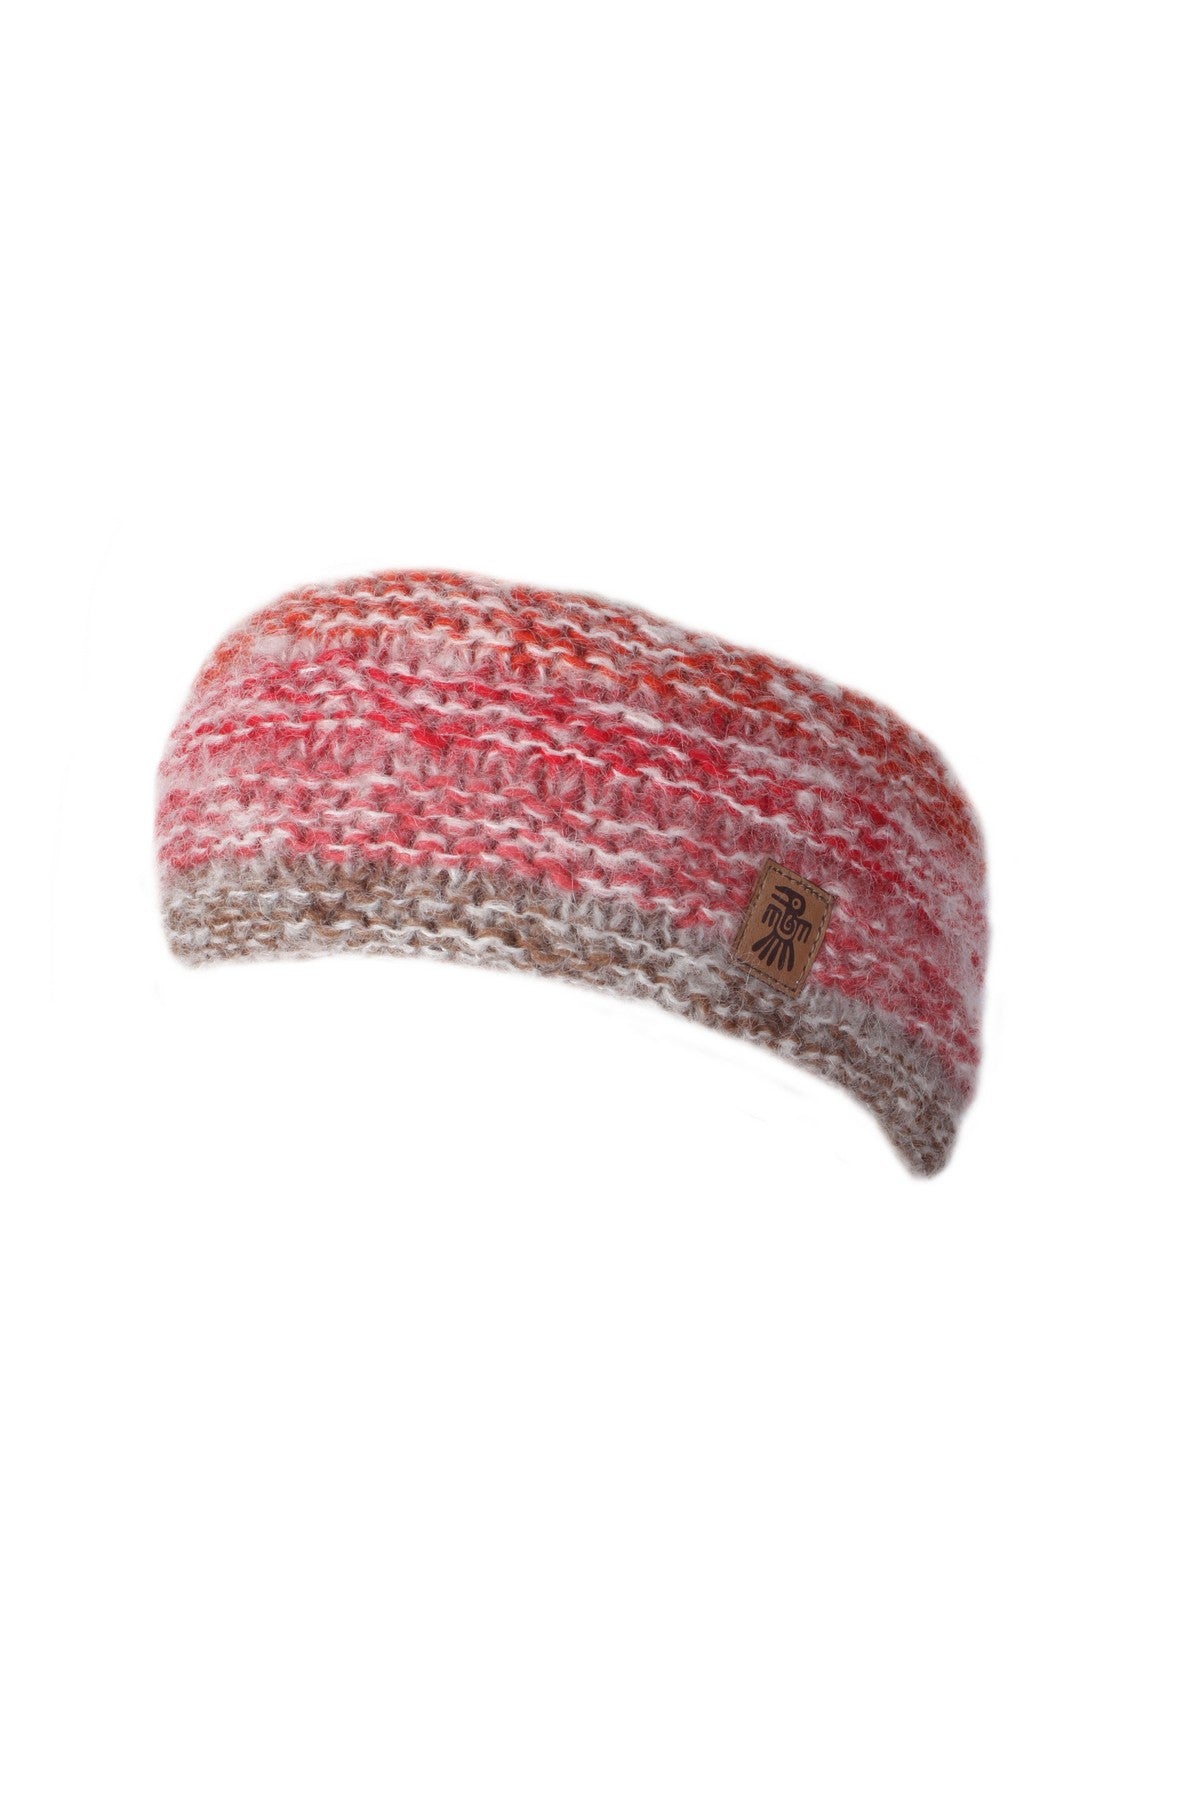 Sierra Nevada Earth Red Headband